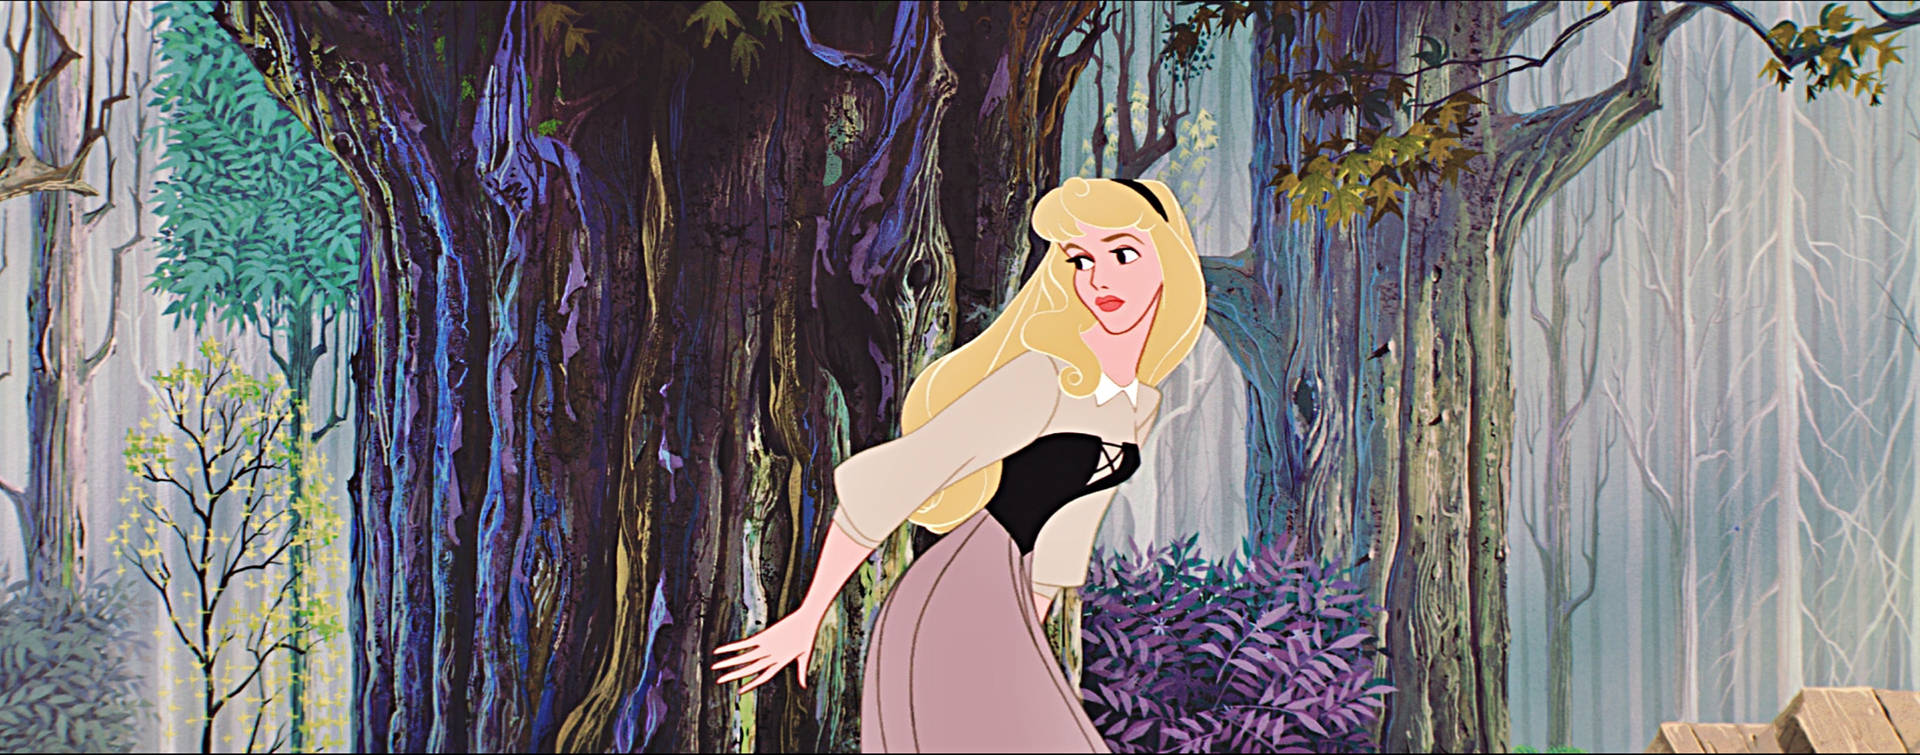 Disney Princess Aurora Hiding